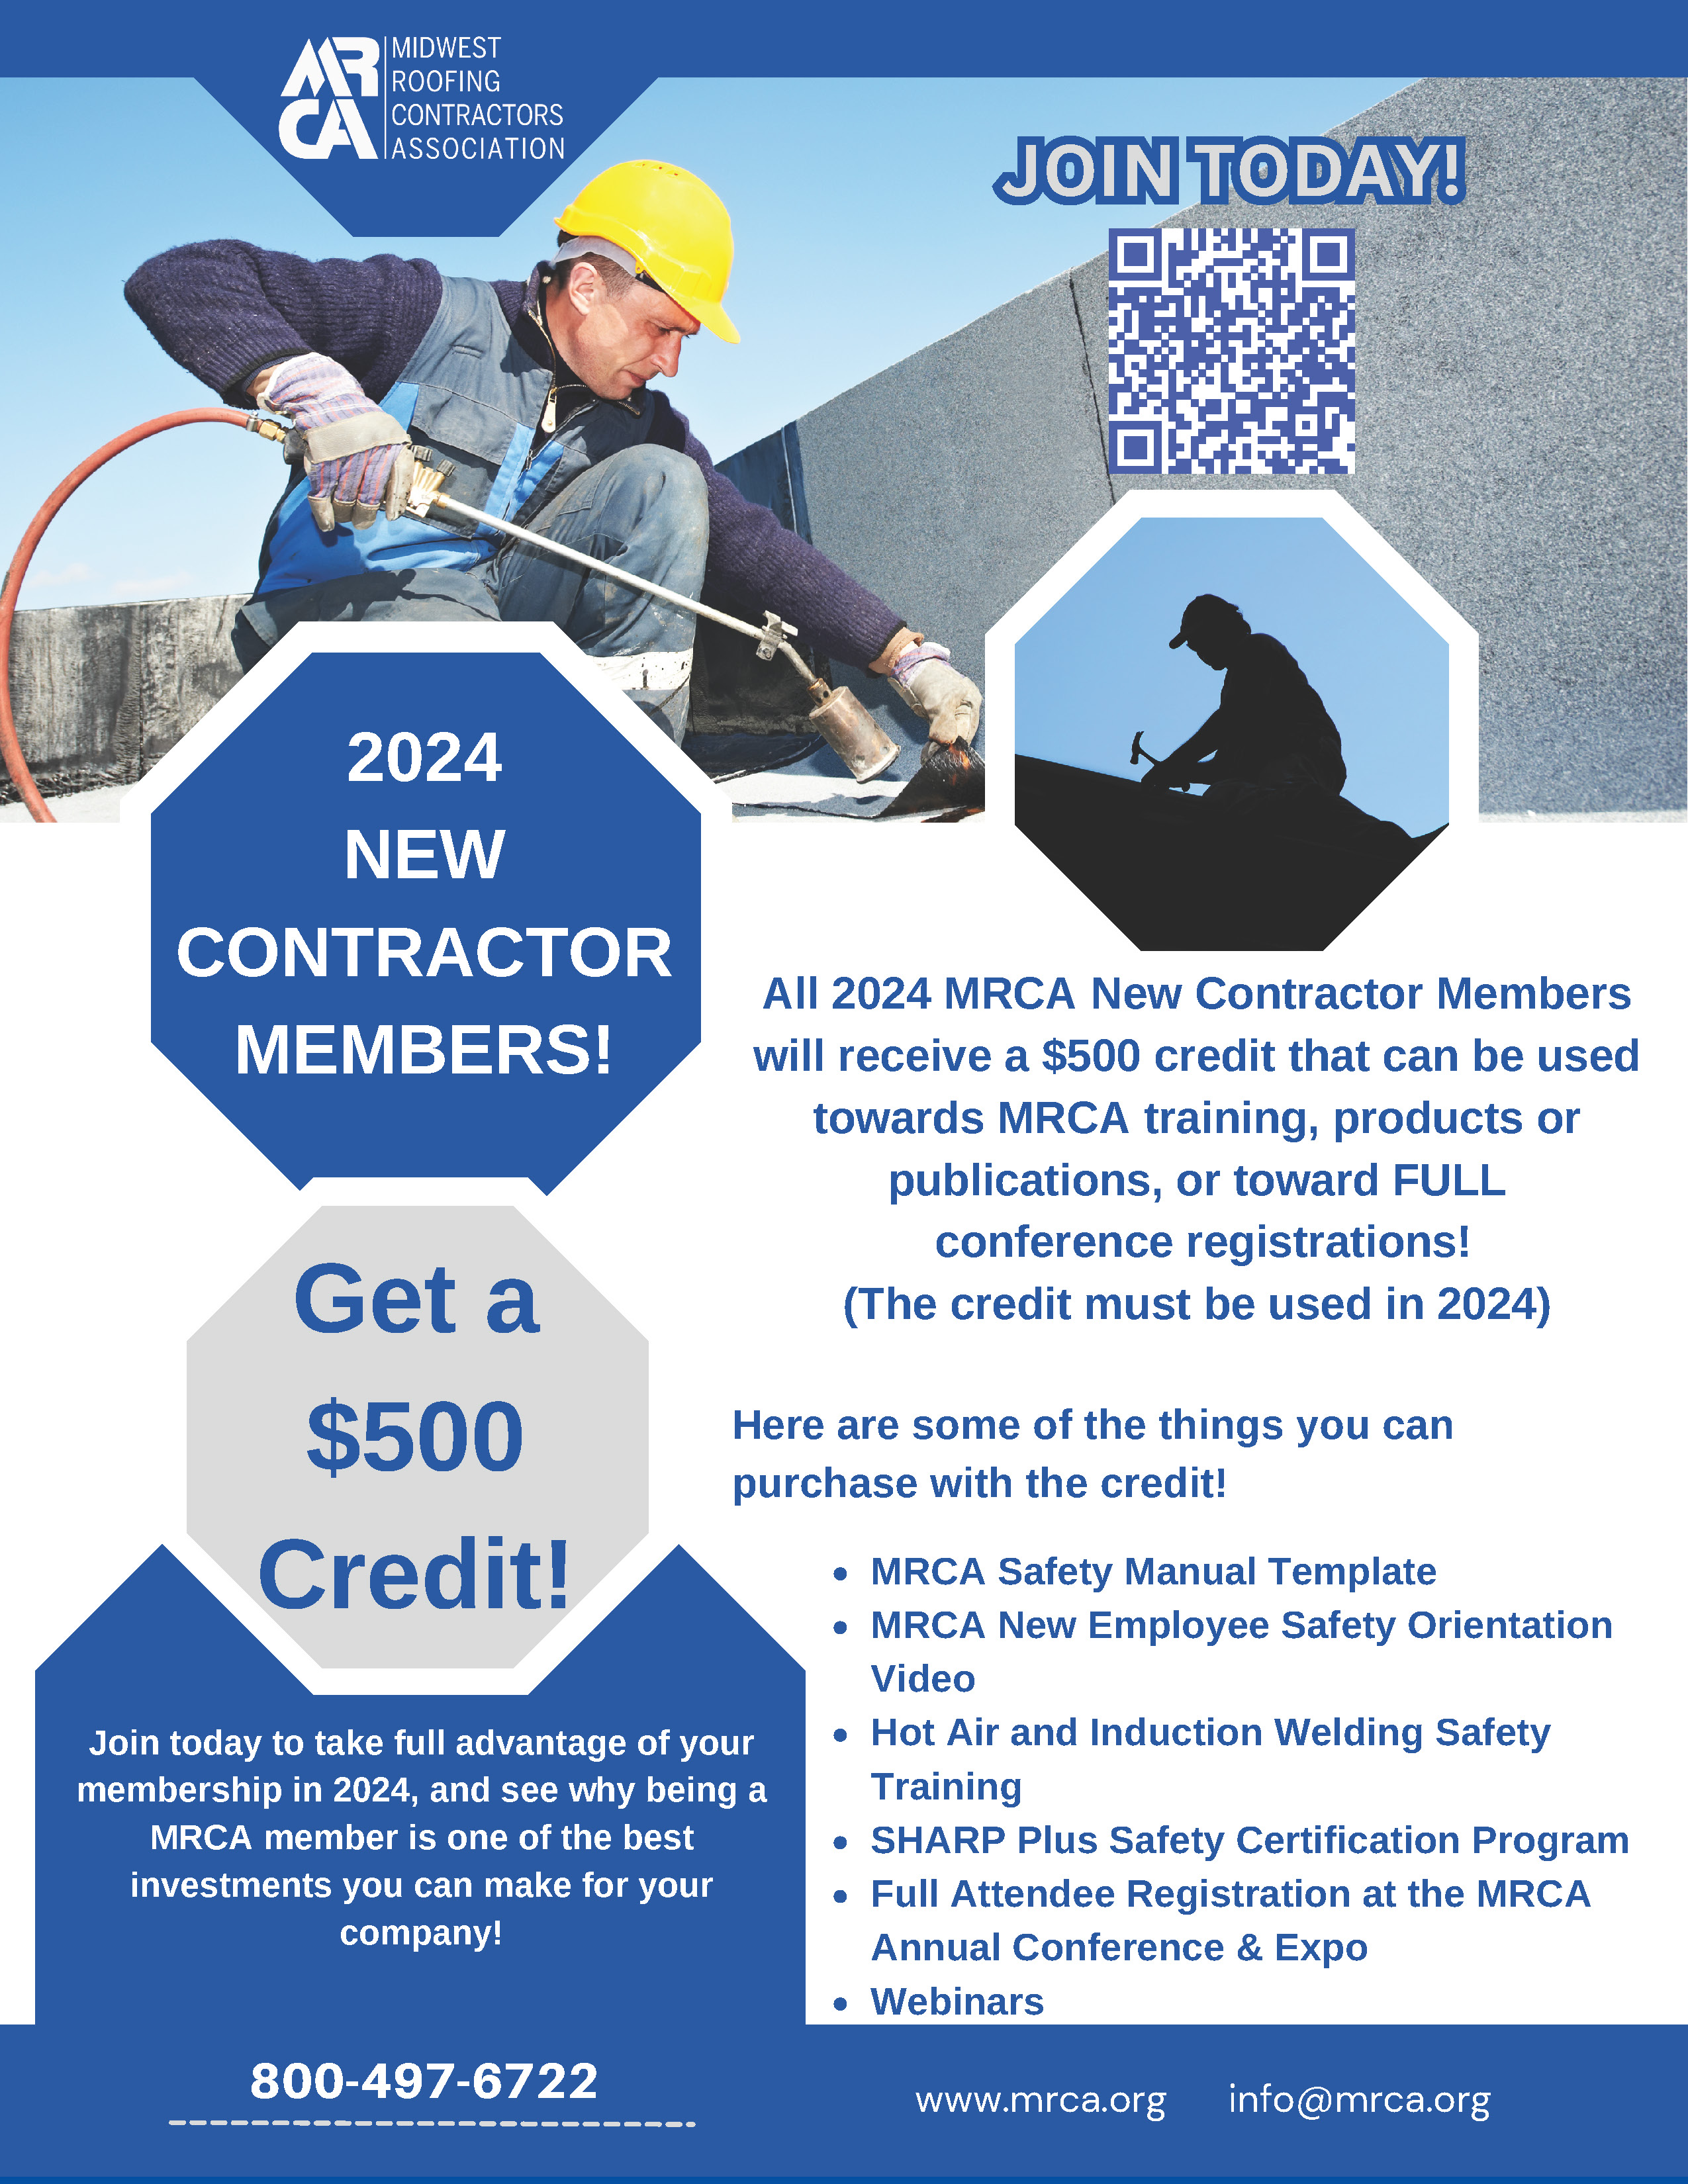 MRCA - 2024 New Contractor Member $500 Credit!